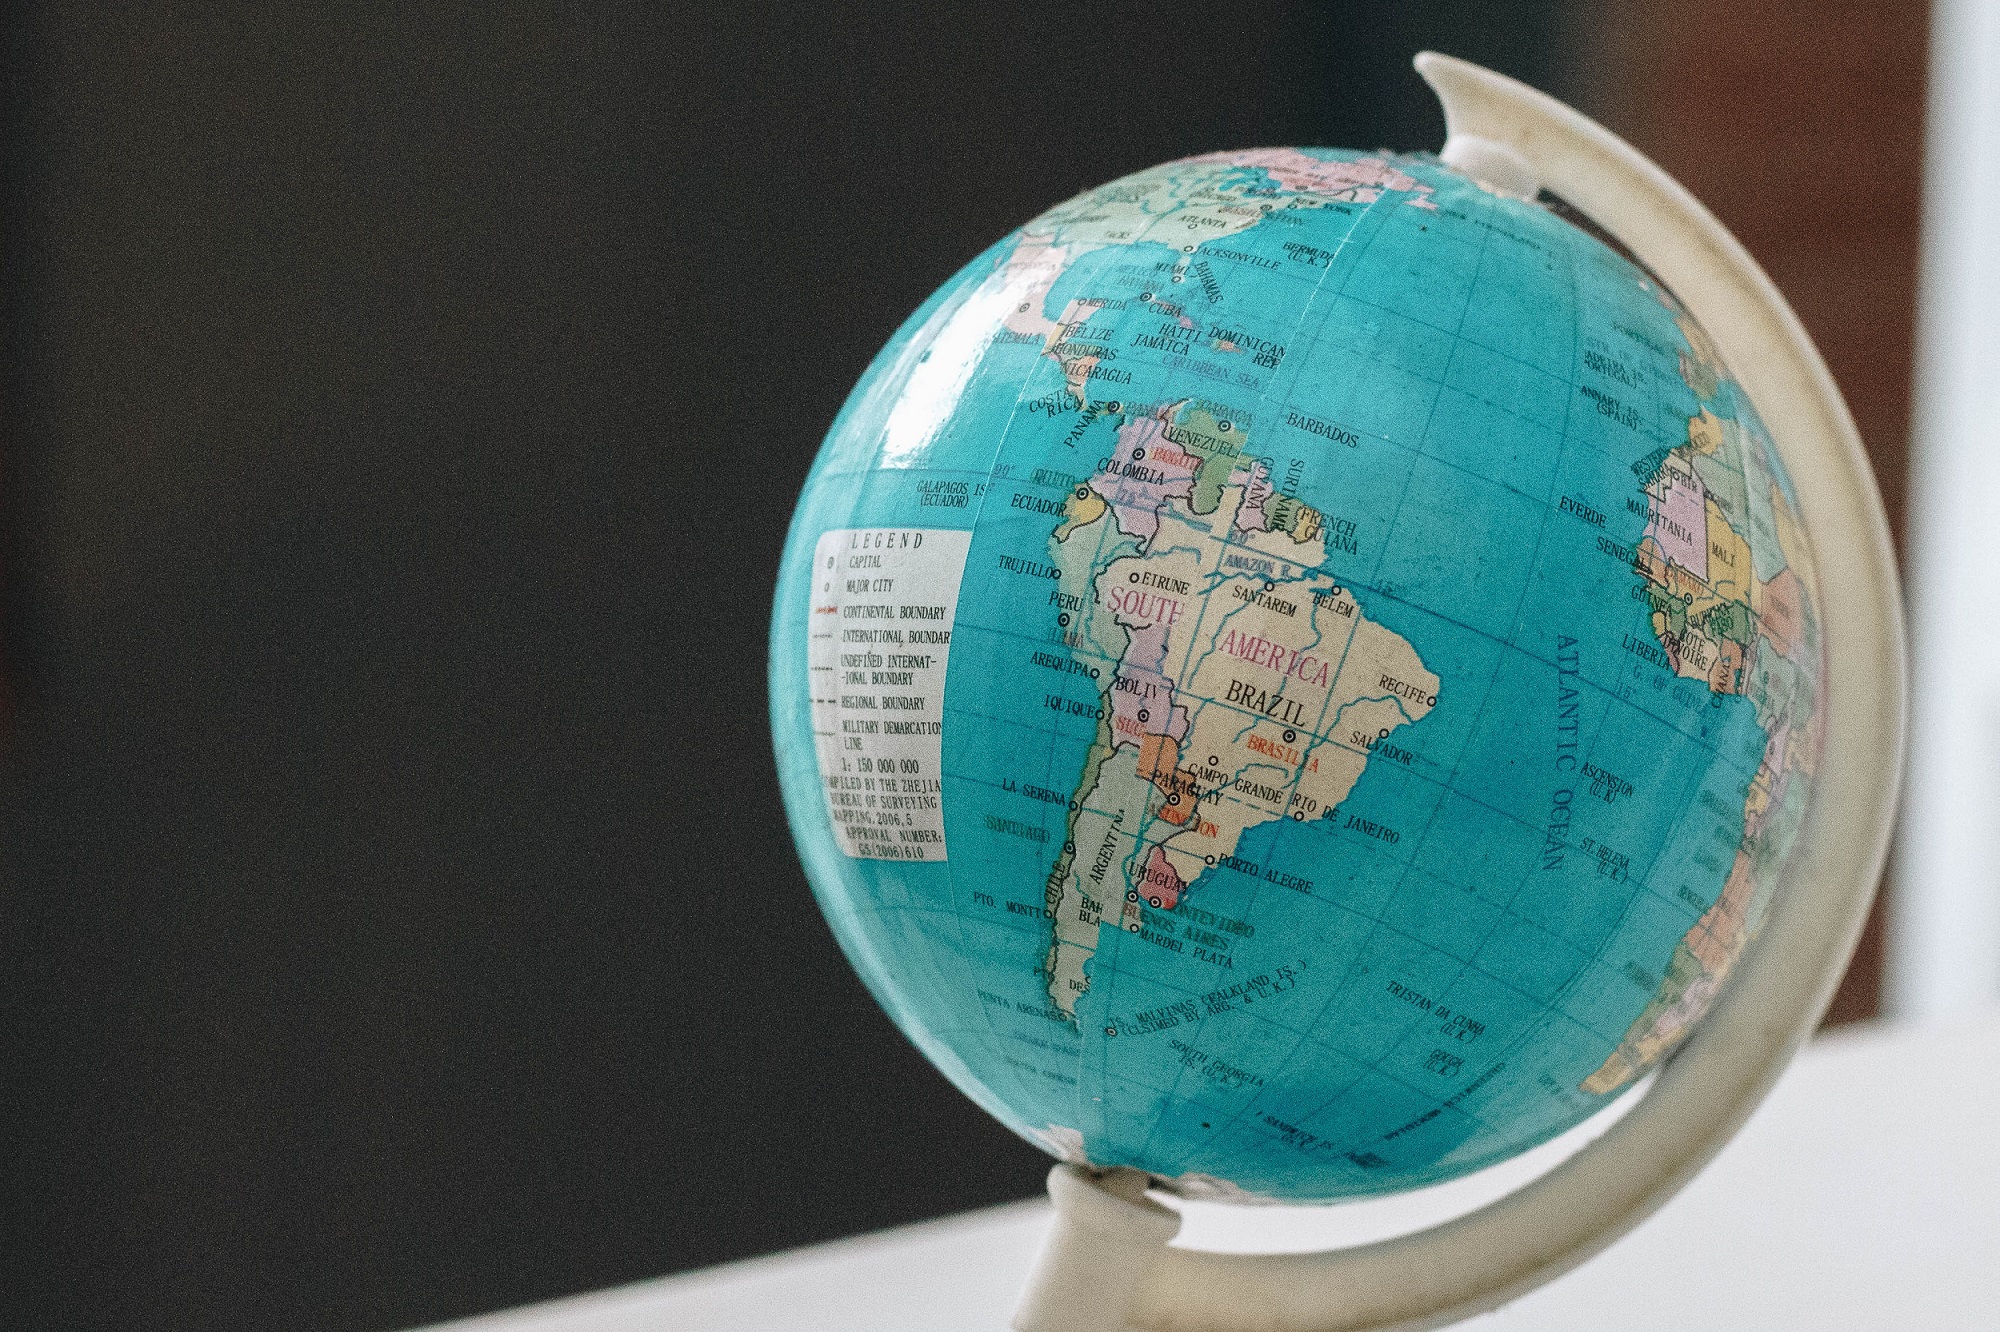 world globe showing South America